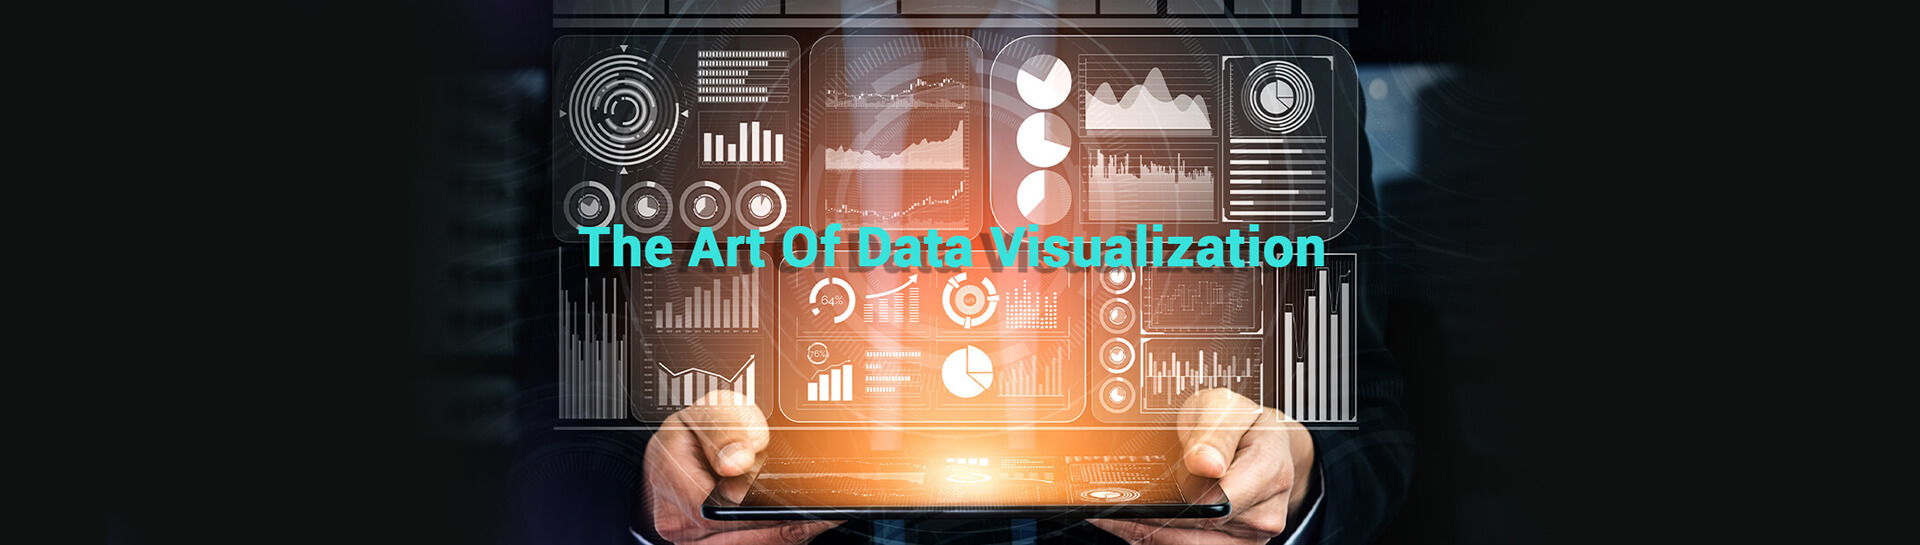 The Art Of Data Visualization